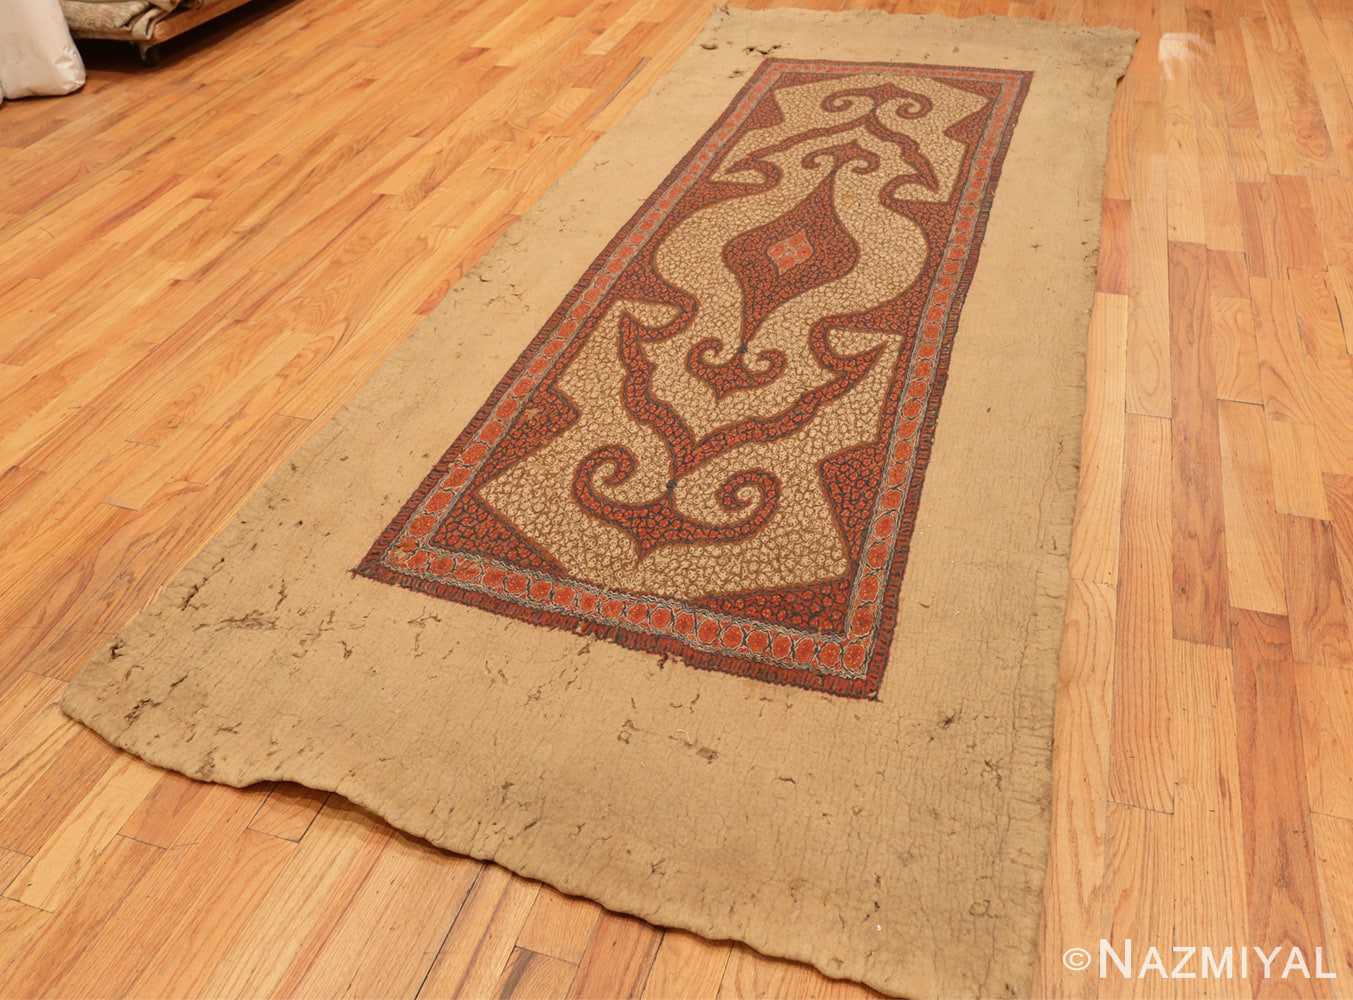 Full Antique Central Asia felt rug 41408 by Nazmiyal